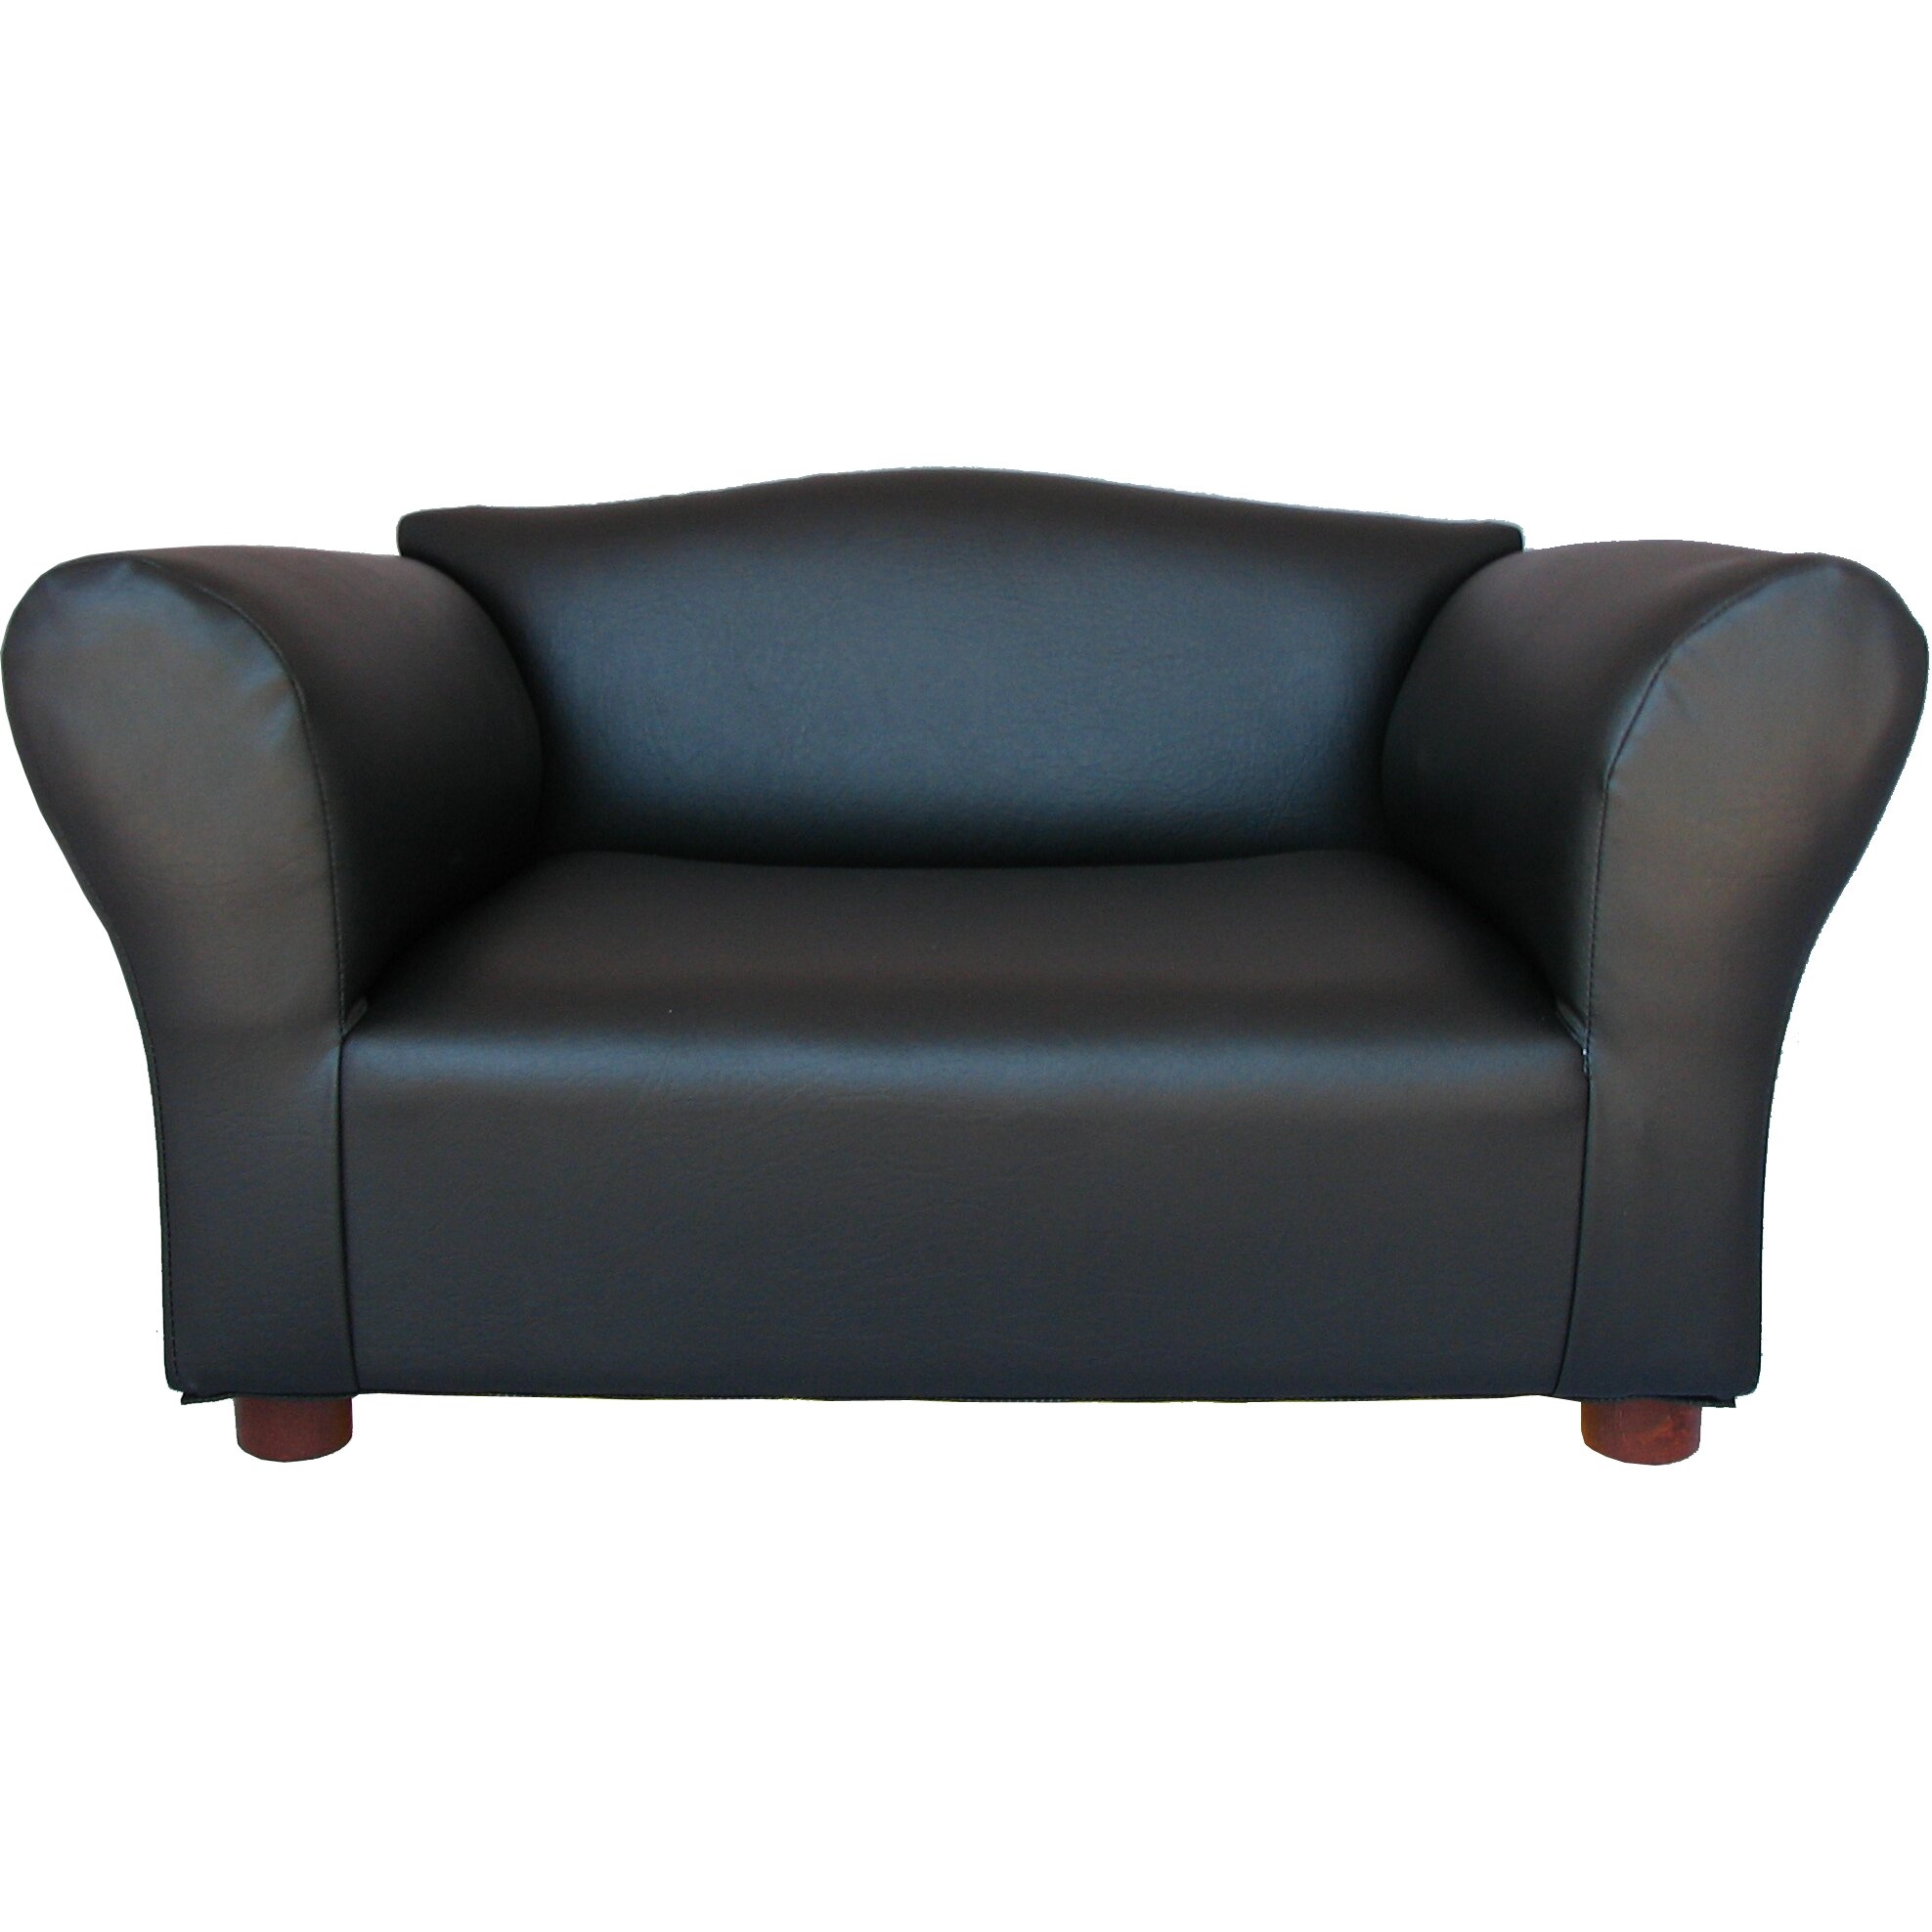 Fantasy Furniture Mini Sofa Black Leatherette Pet Bed